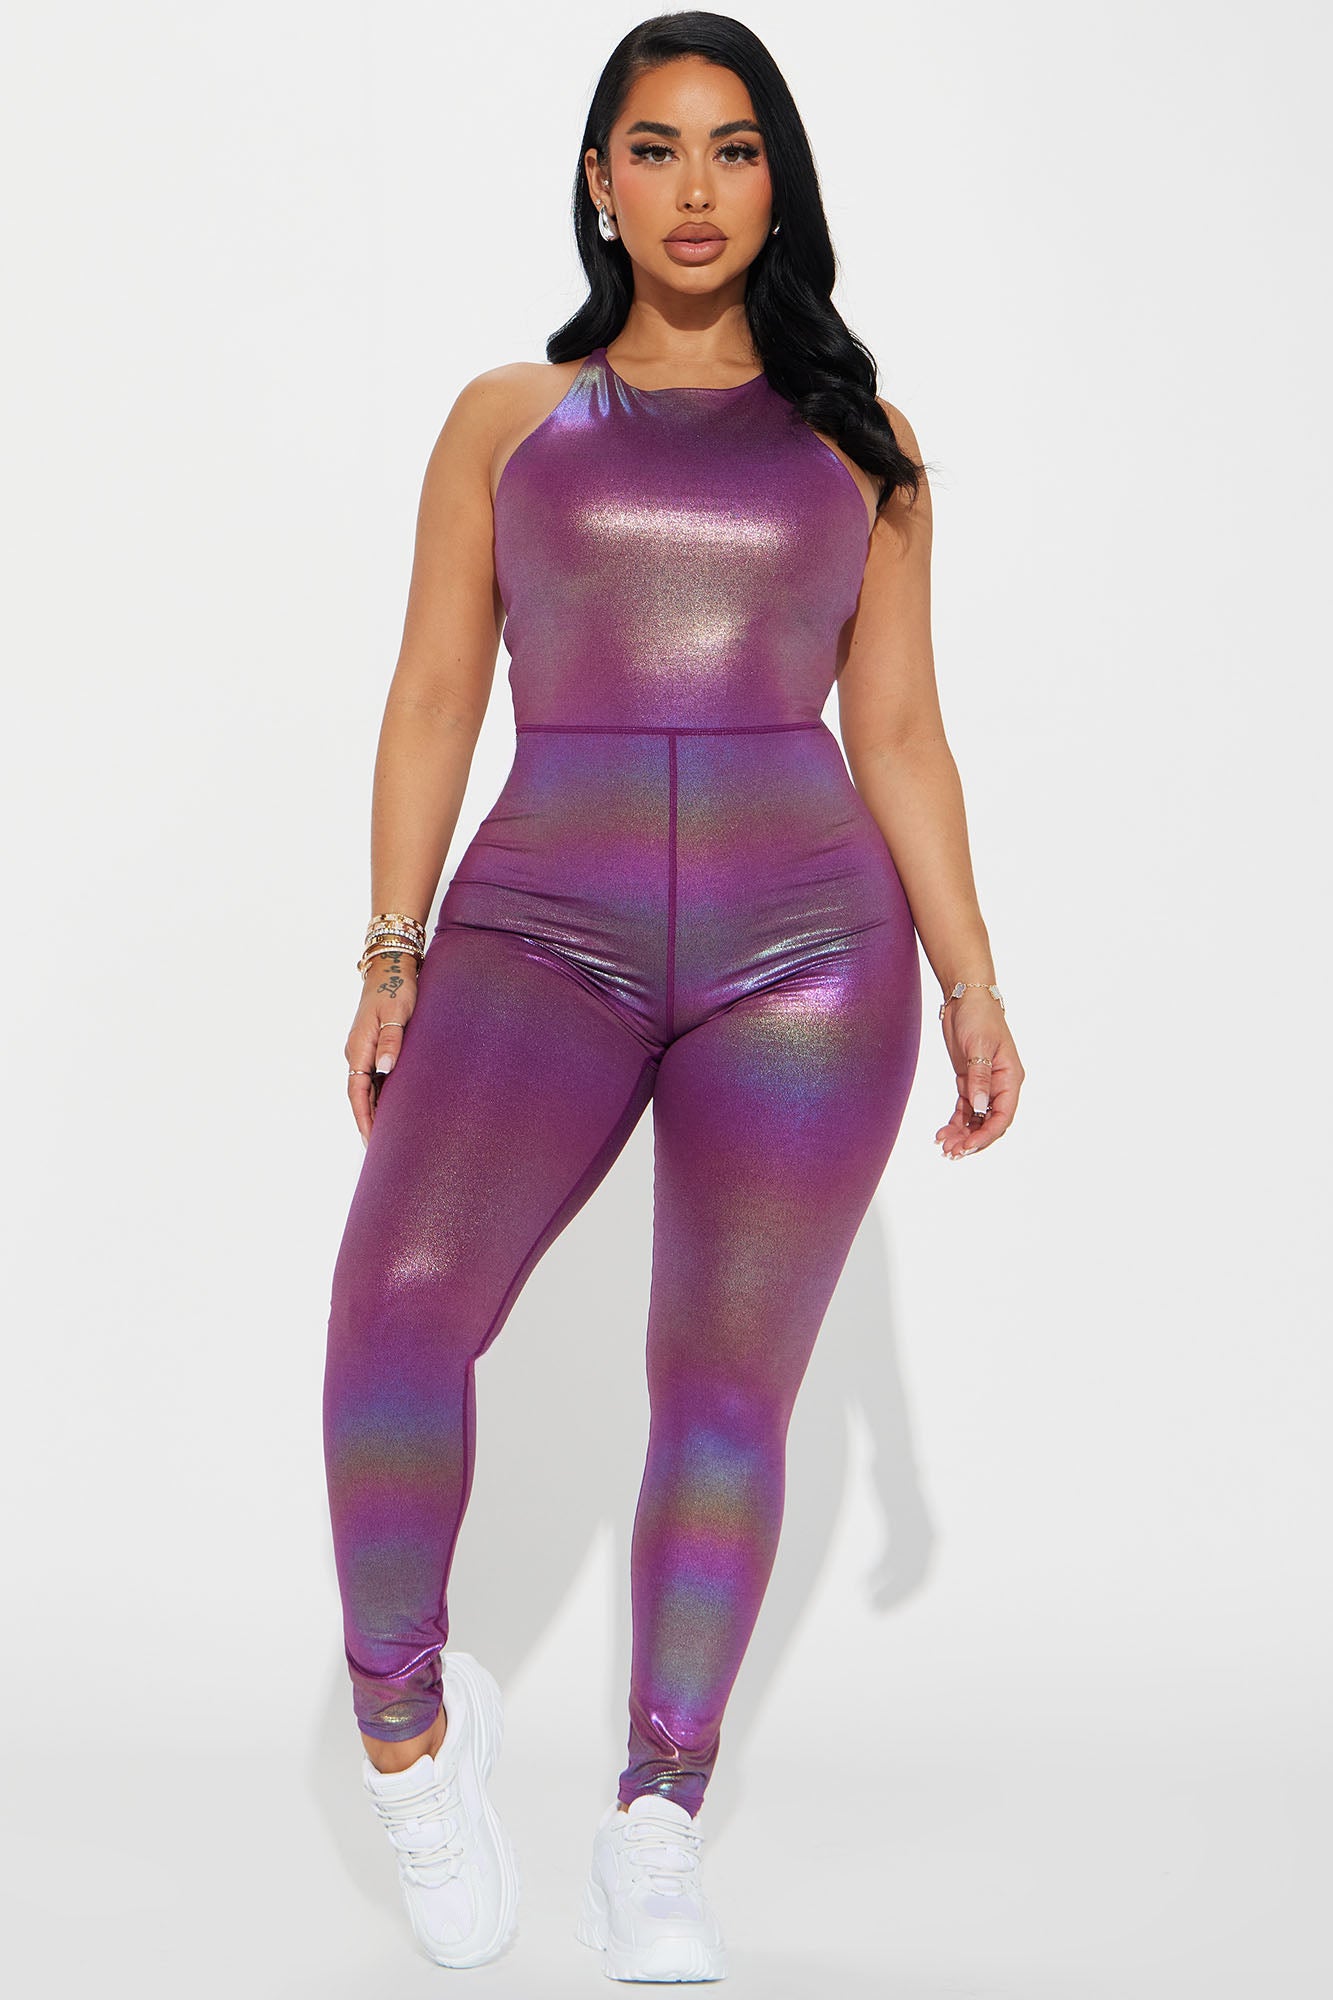 Sweat Glitter Shimmery Active Jumpsuit - Purple/combo, Fashion Nova, Nova  Sport